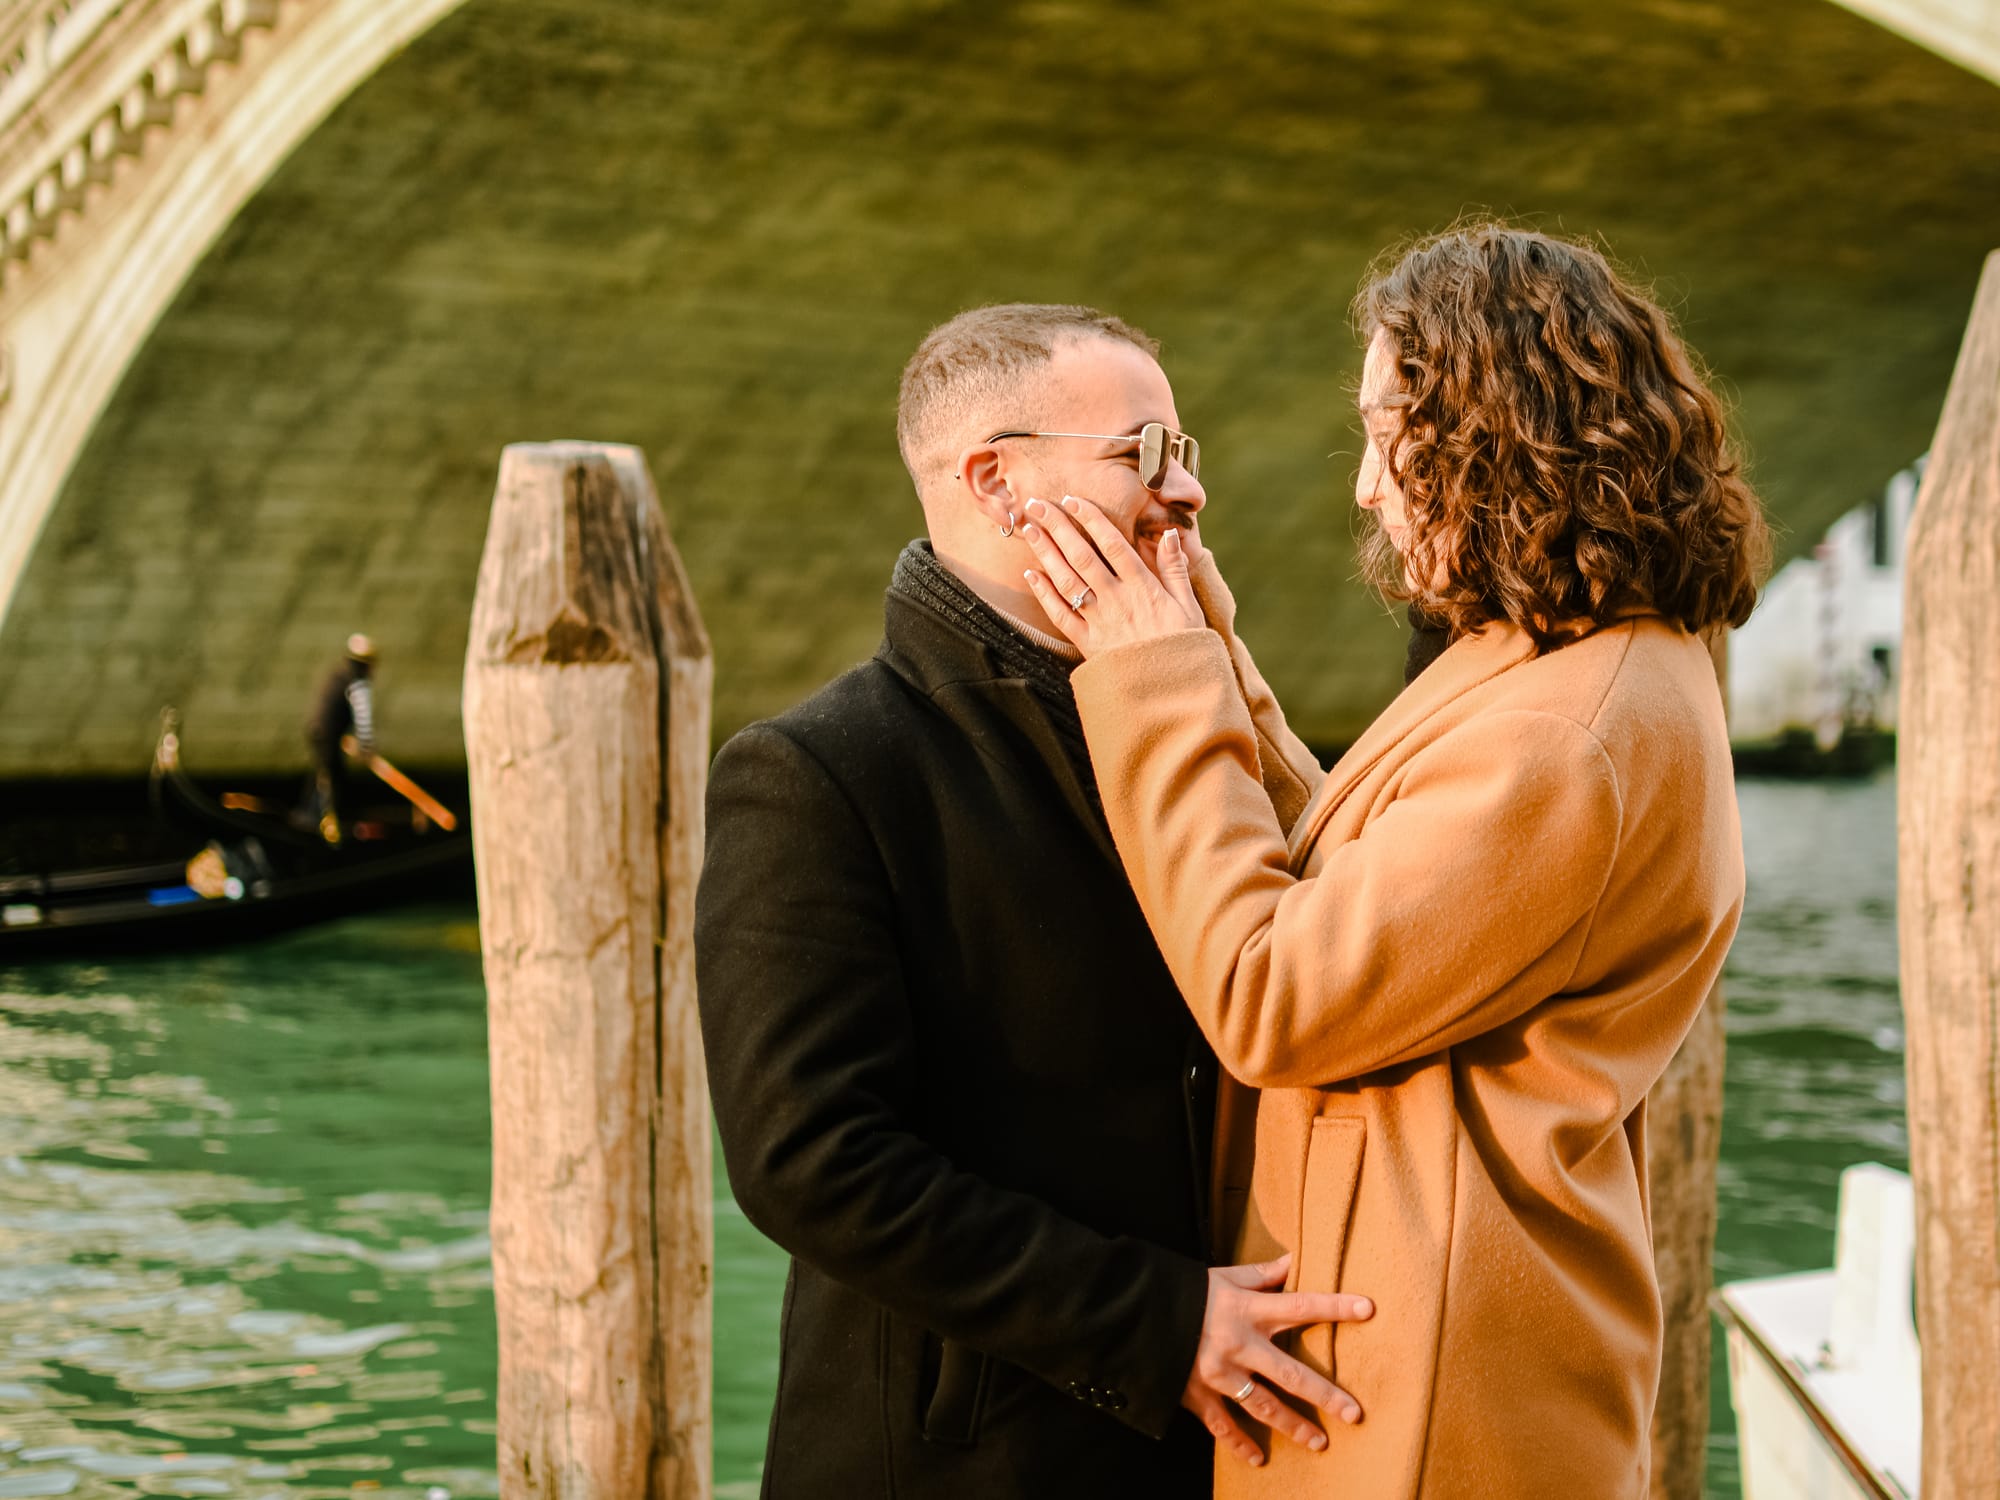 Romantic moment on Rialto Bridge: Couple's picturesque winter photoshoot